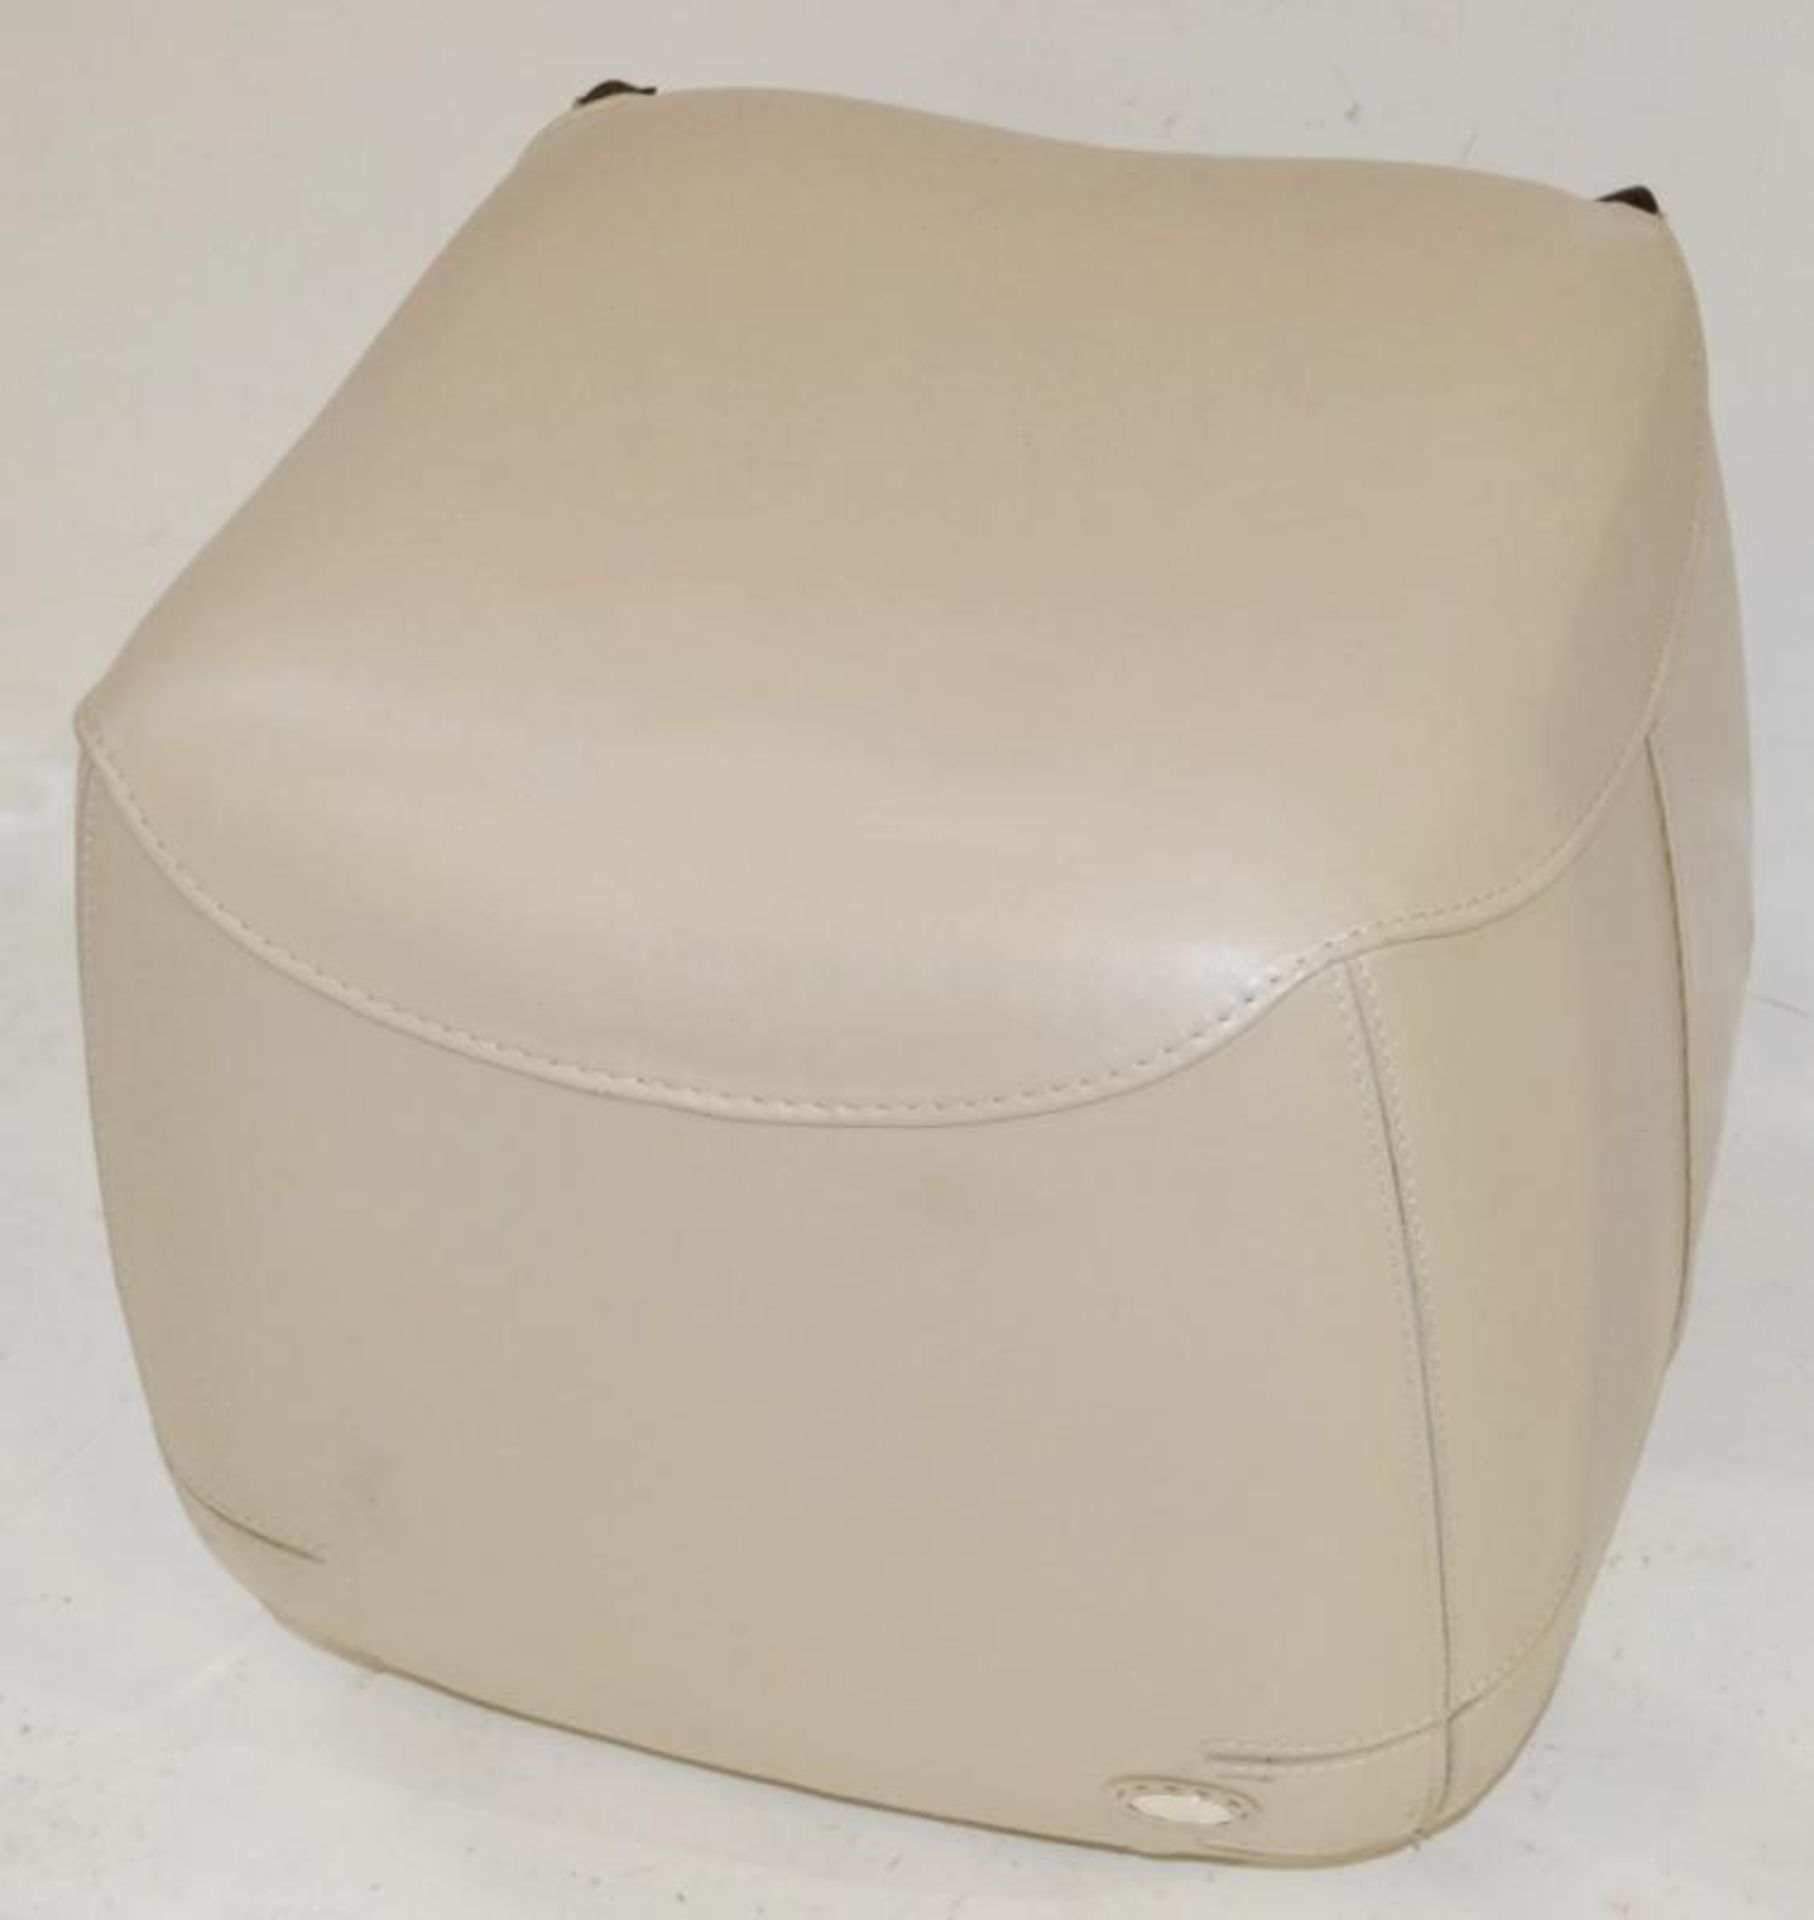 1 x Fendi 'Cat' Cream Leather Upholstered Pouffe / Ottoman - Ref: 5140500/B - Original RRP £1,779 - Image 6 of 6